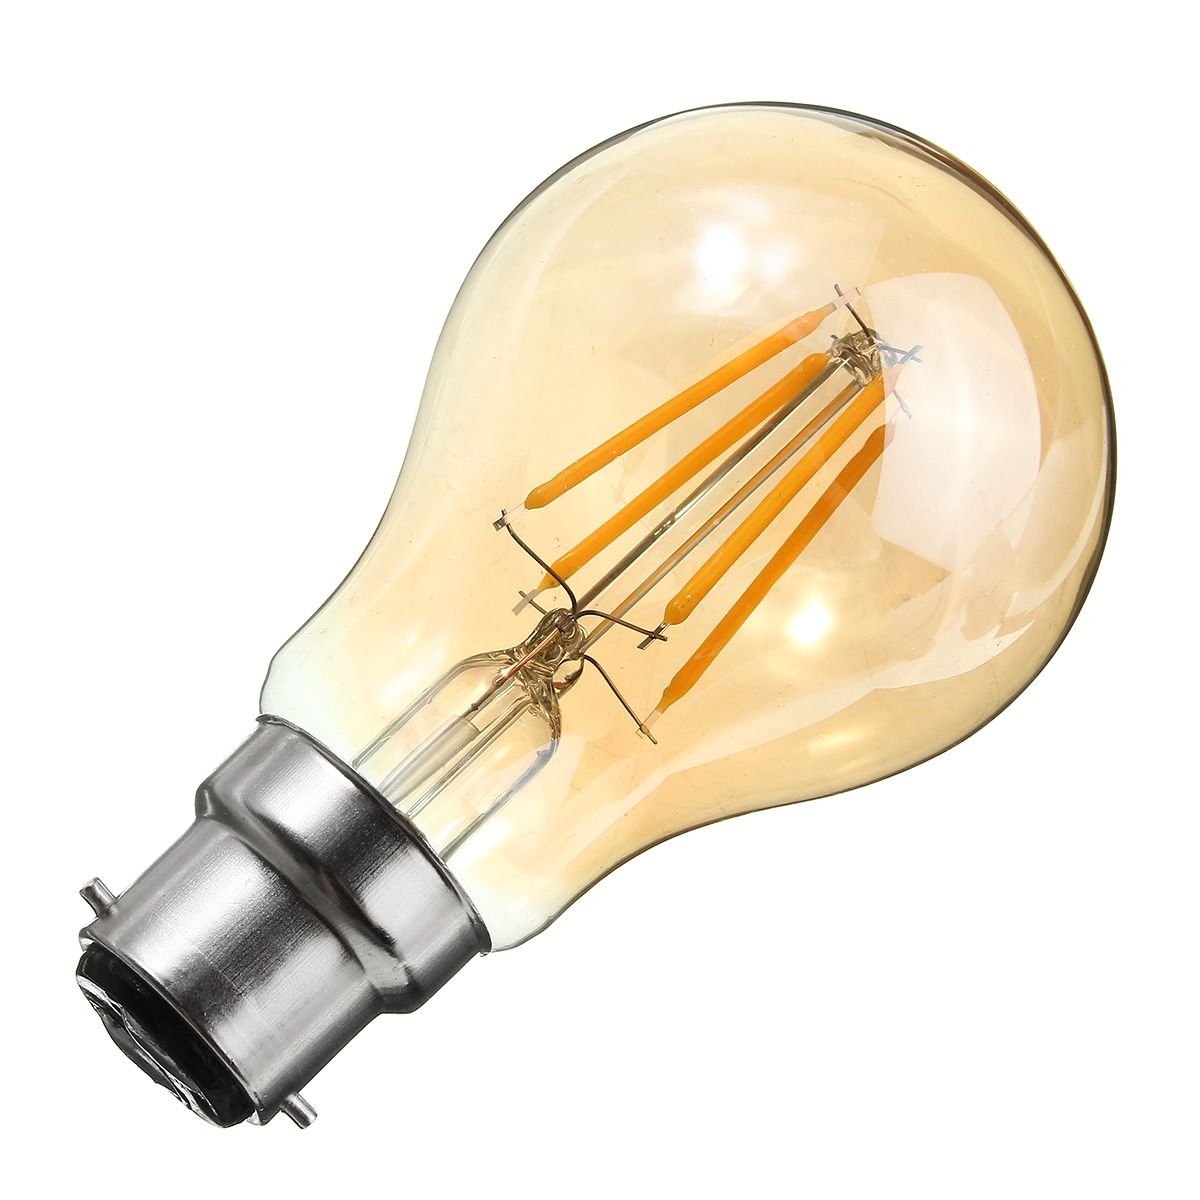 A60-E27B22-4W-Retro-LED-Filament-Incandescent-Light-Bulb-for-Bedroom-Decoration-AC220-240V-1127750